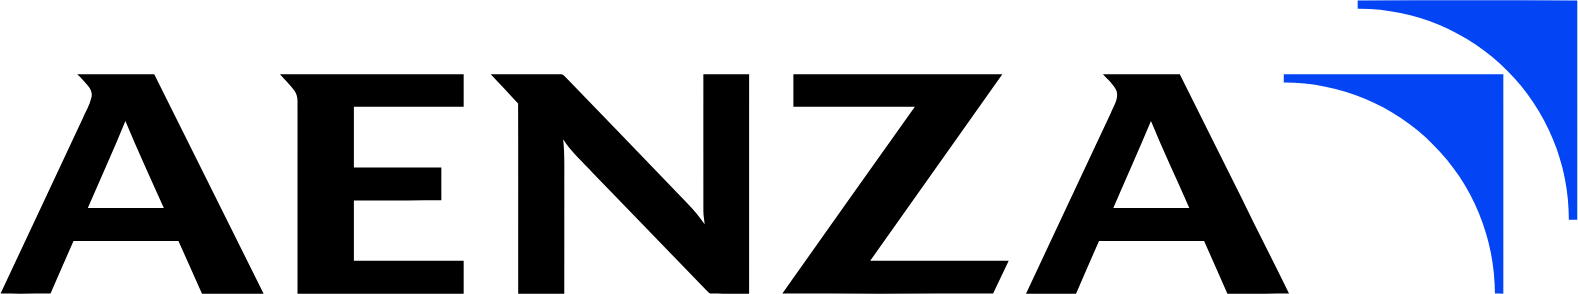 Aenza logo large (transparent PNG)